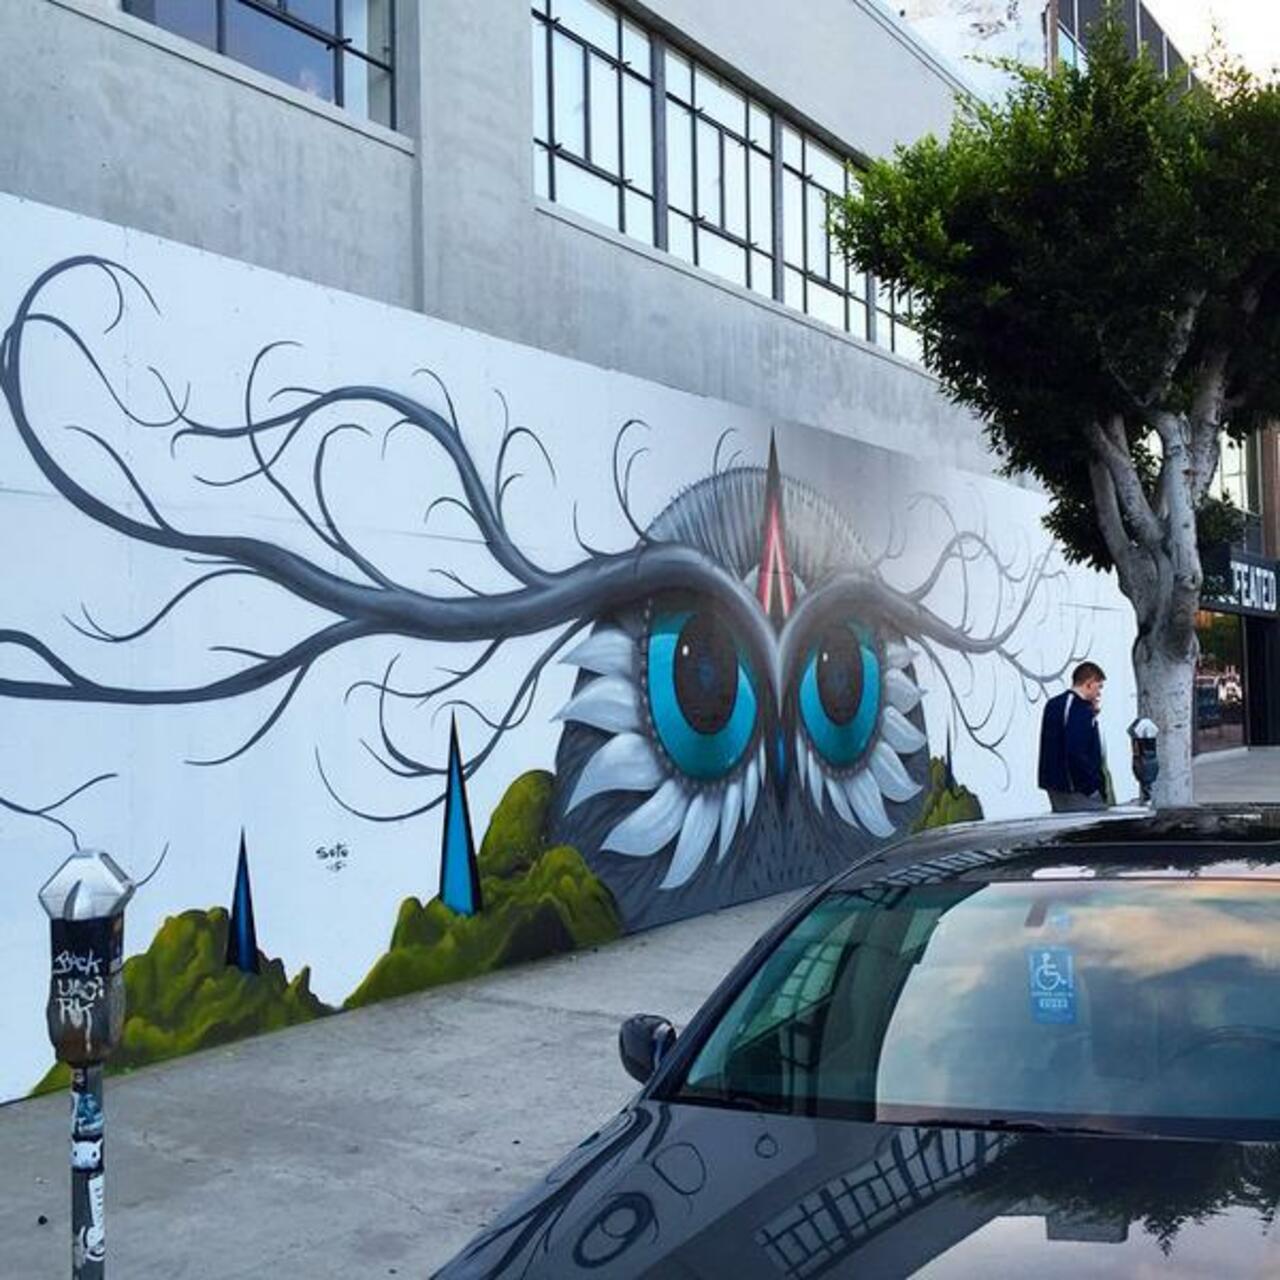 RT @upbyartists: JEFF SOTO in #LosAngeles 
#streetart #mural #graffiti #art http://t.co/rfhCPWLxLA